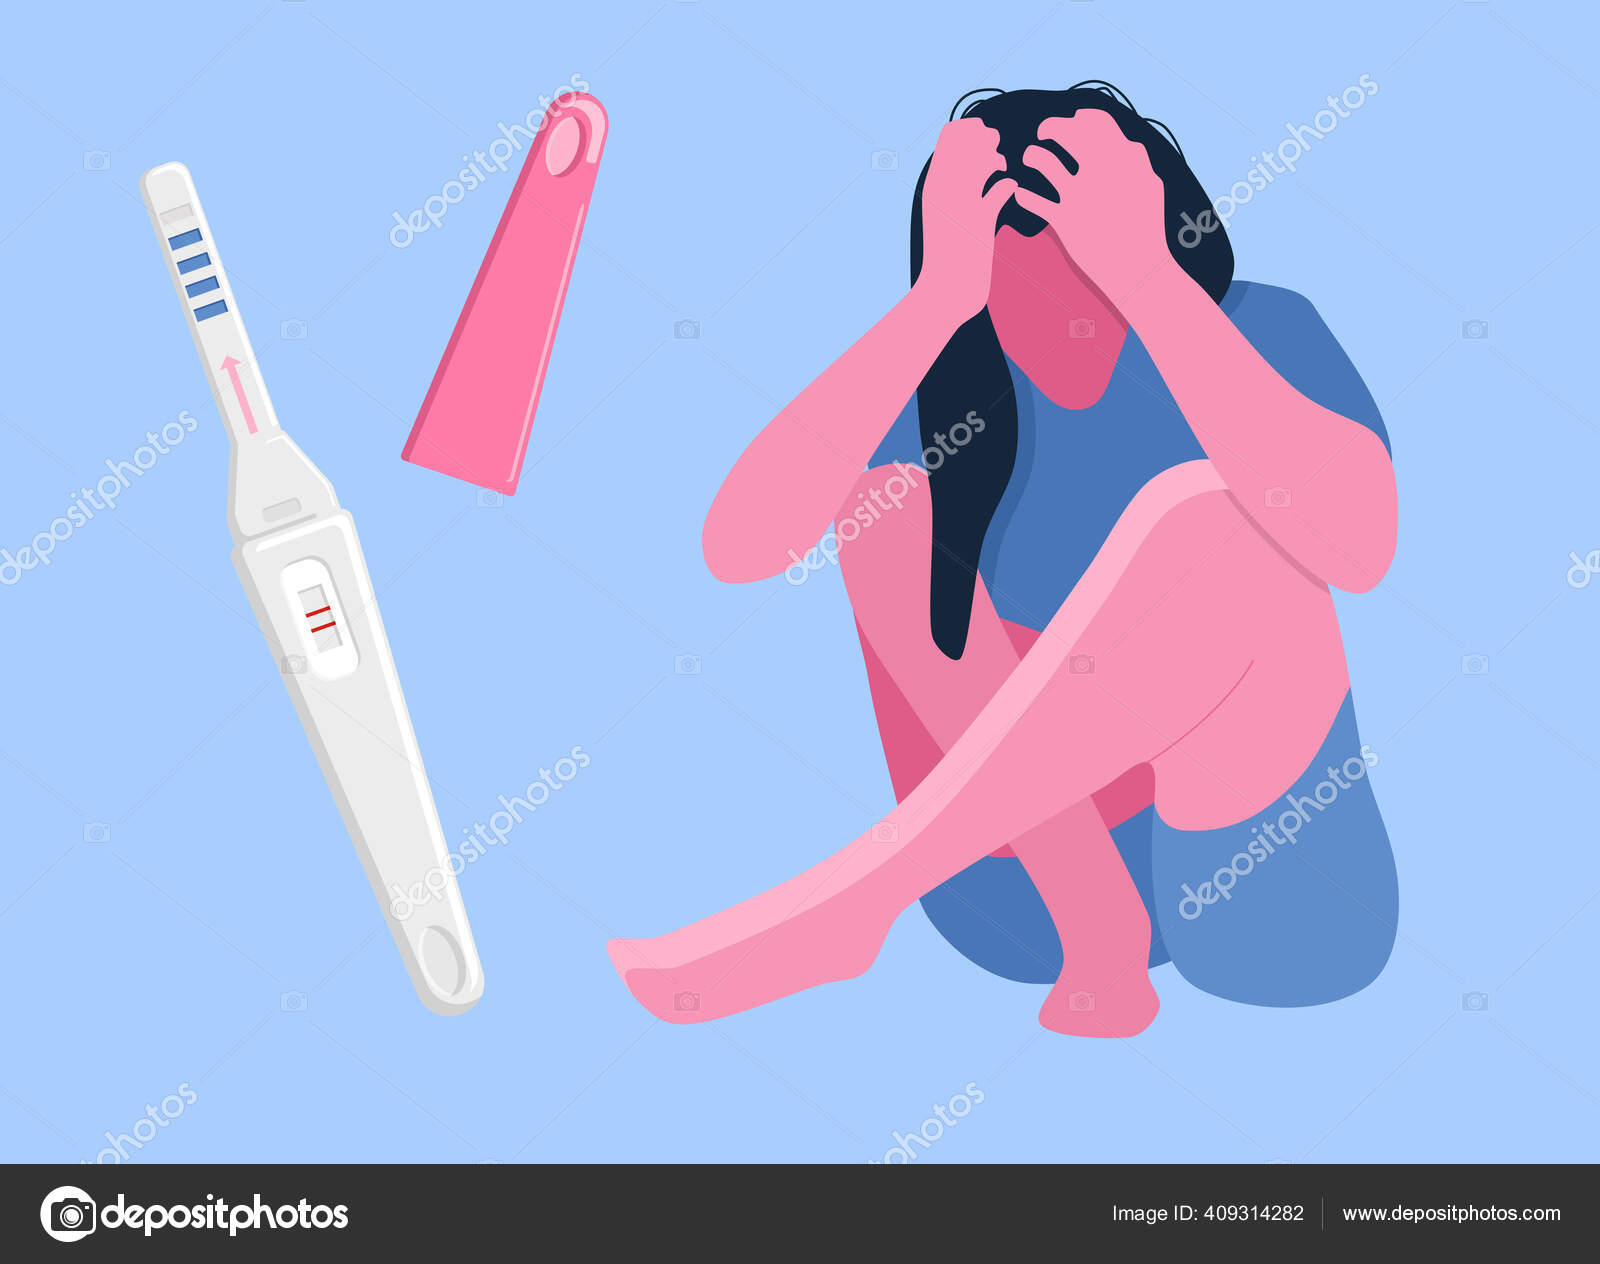 Teenage pregnancy Vector Art Stock Images | Depositphotos